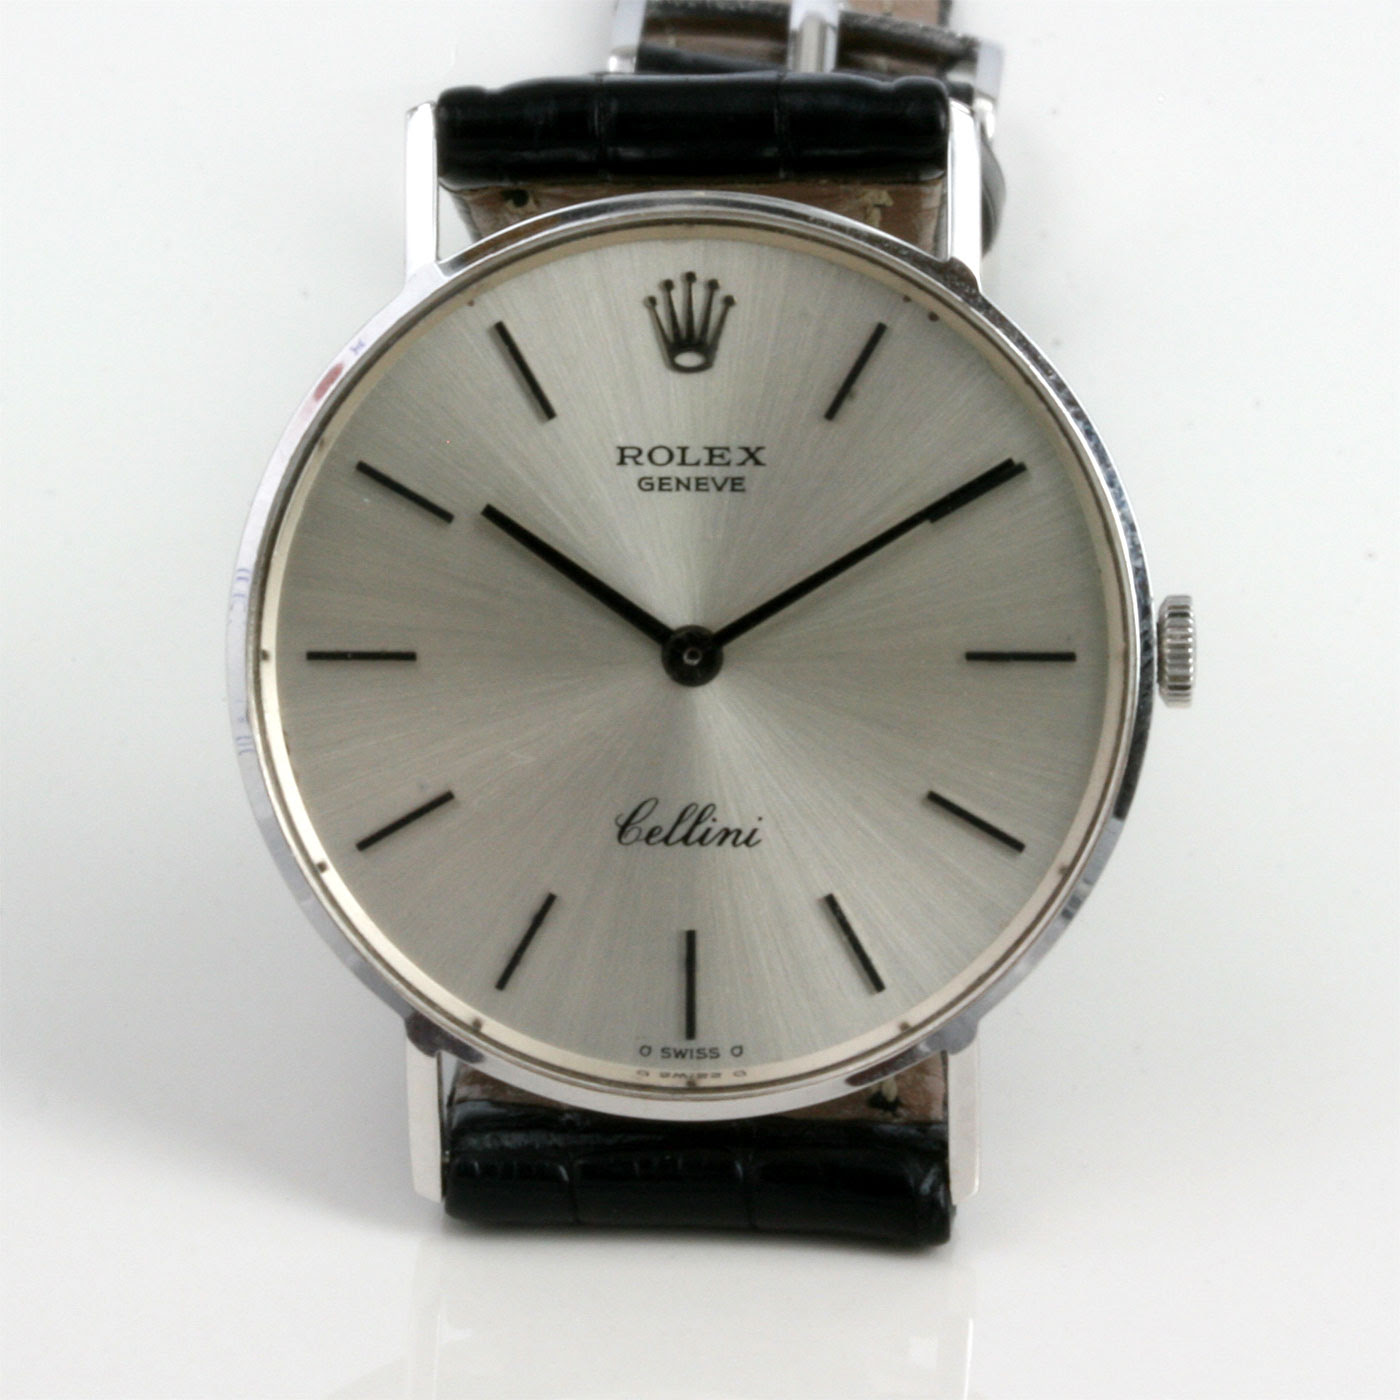 White gold Rolex Cellini watch.